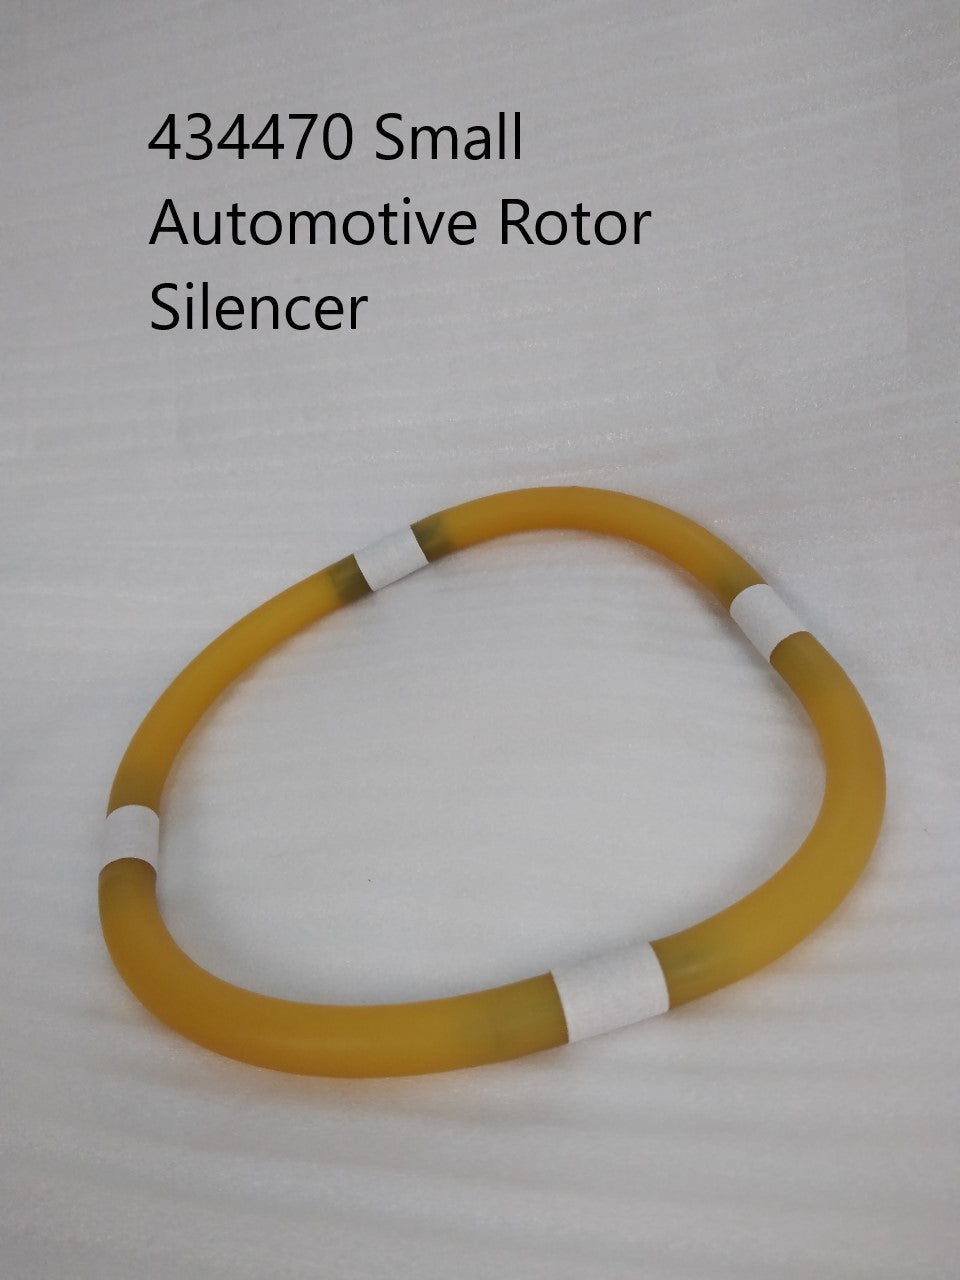 Silencer -Vented Rotor  - Small